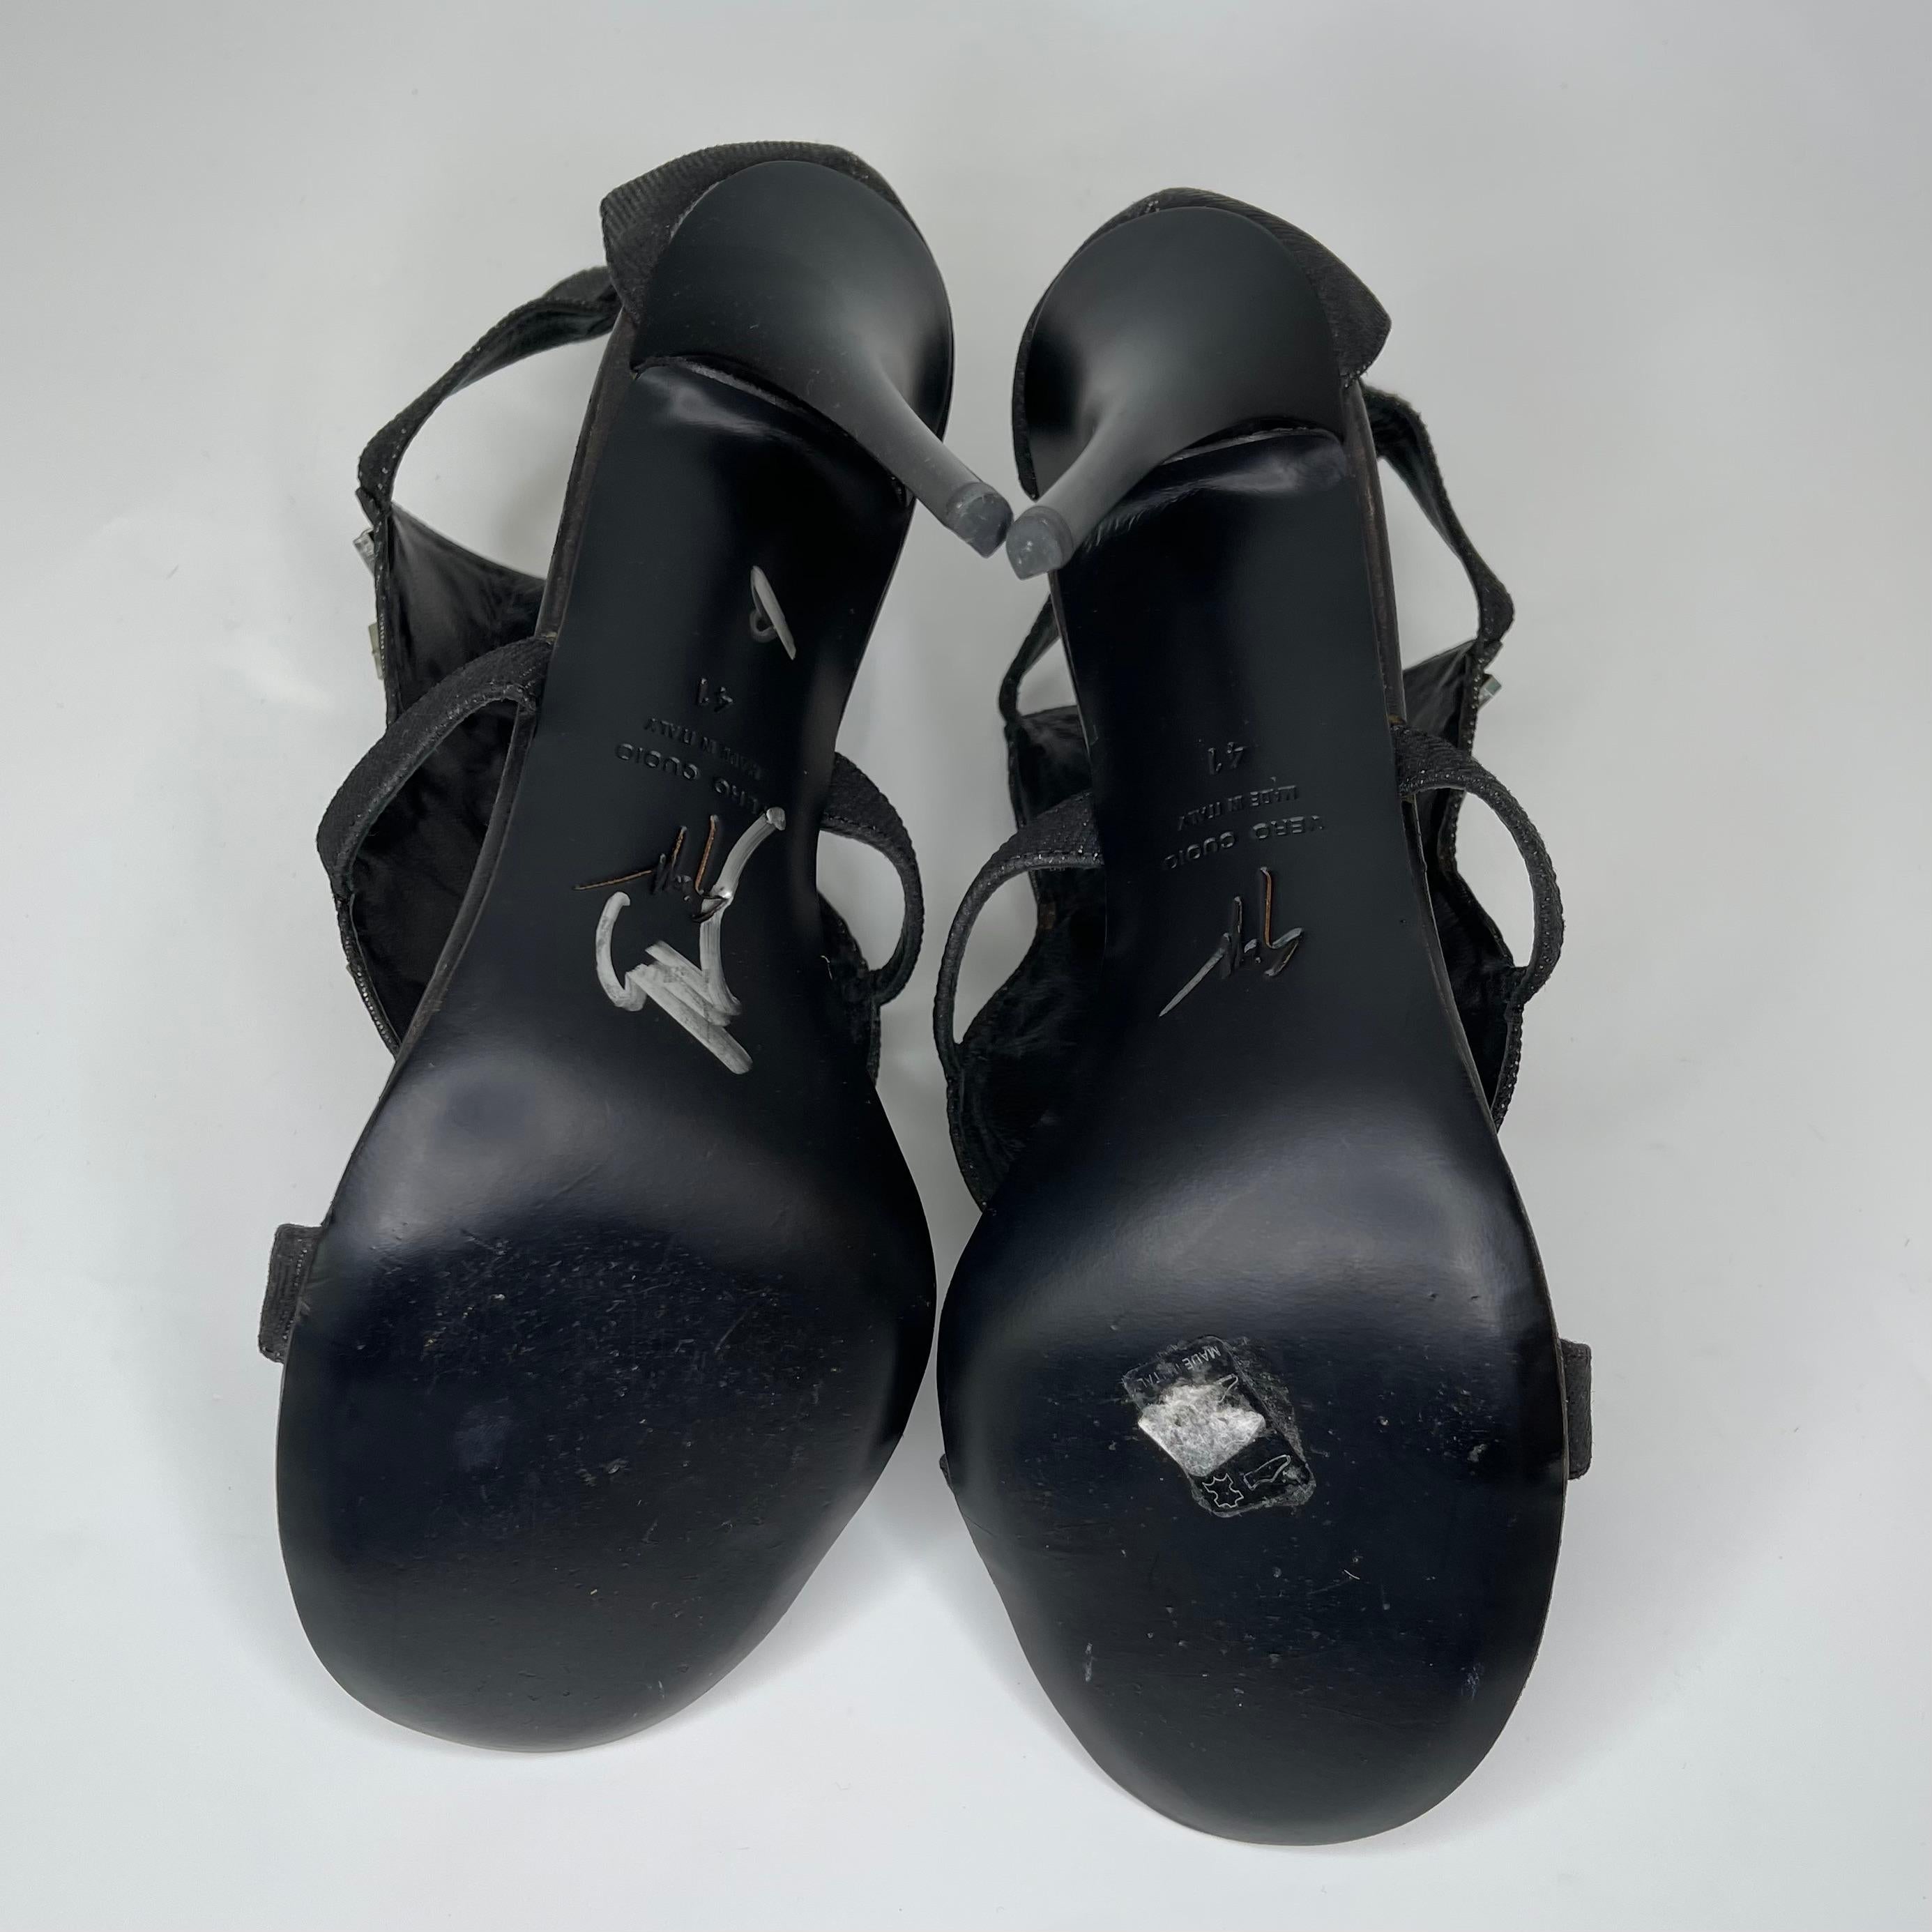 Black Giuseppe Zanotti Limited Edition Signed Mirrored Heels (41 EU) For Sale